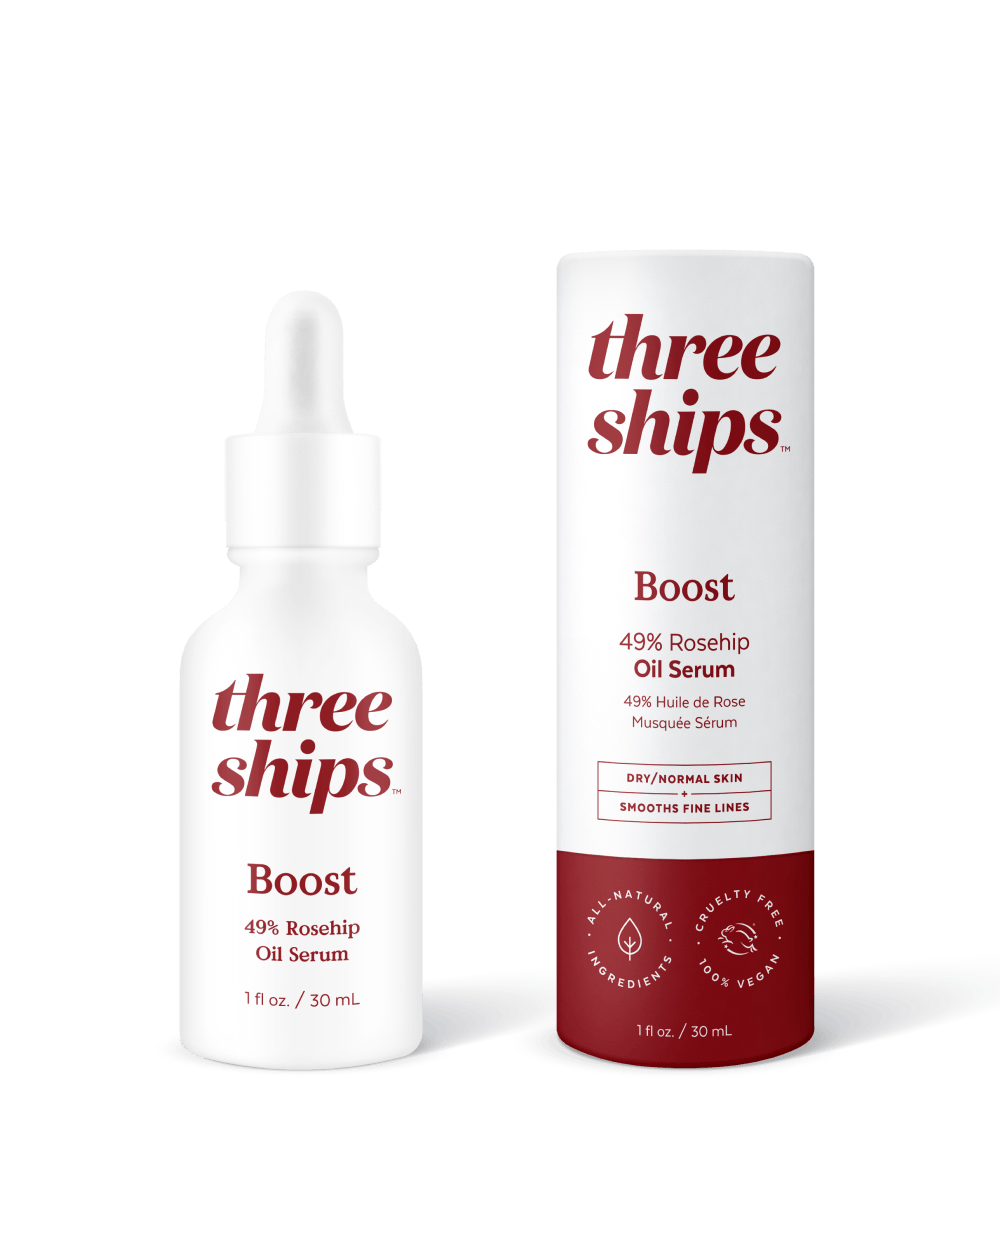 Boost 49% Rosehip Oil Serum - Three Ships Beauty - Consumerhaus